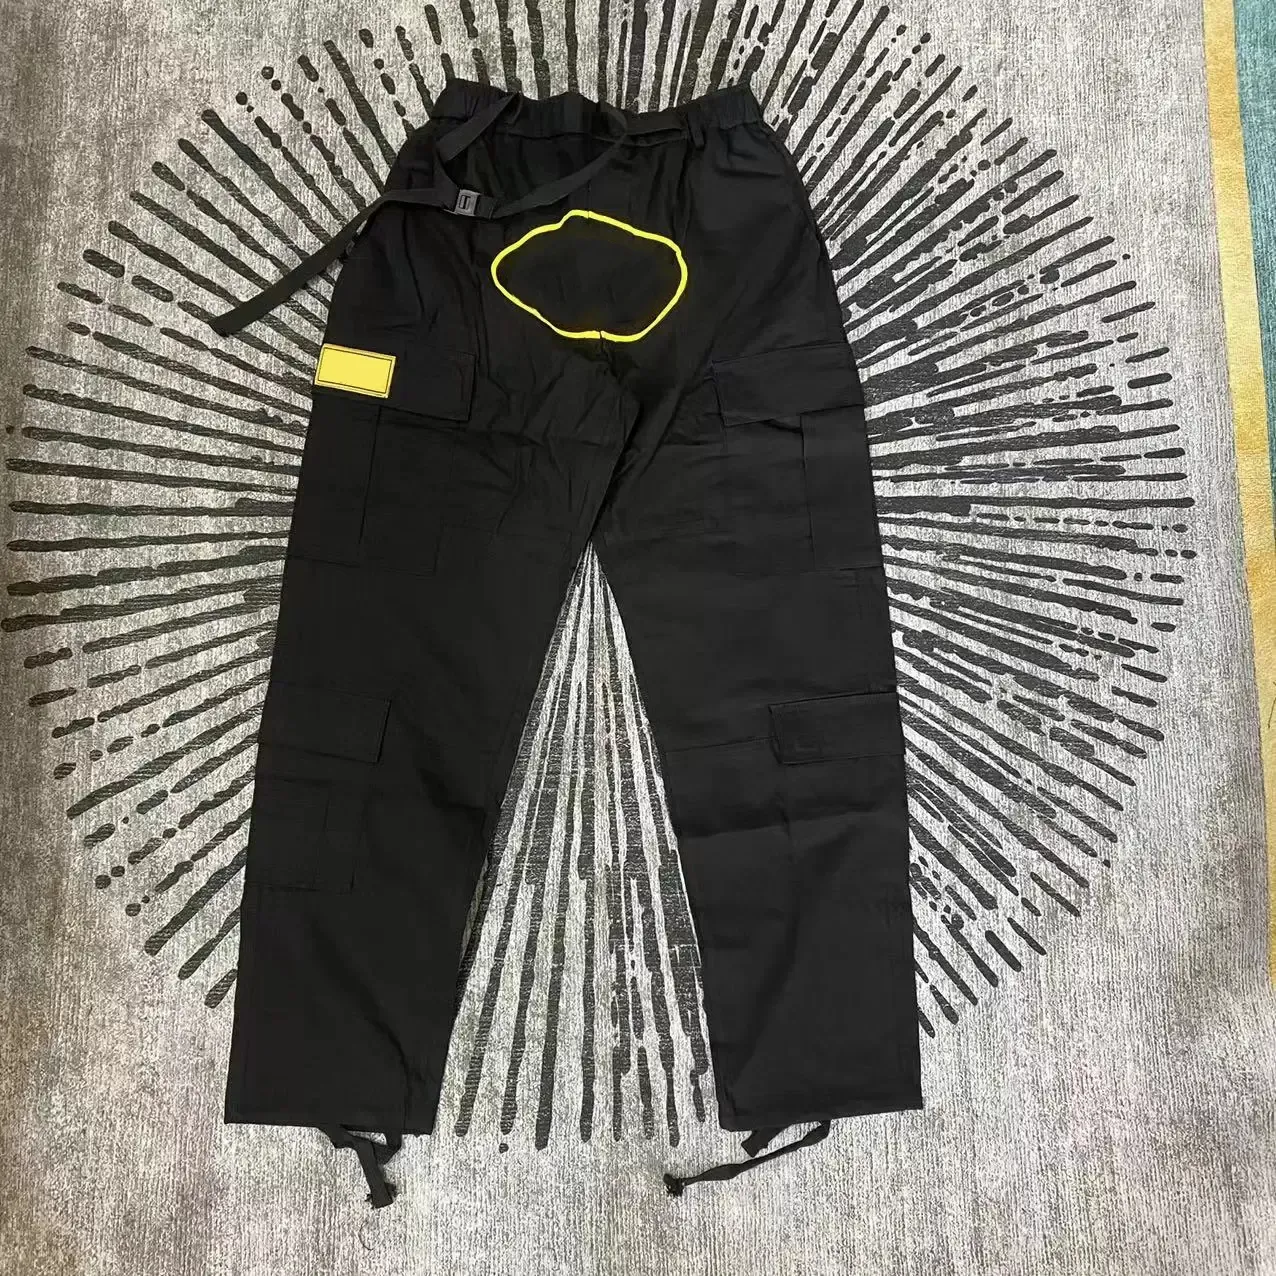 Corteiz Cargo Pants Men’s Multi Pocket Black / Yellow Cargos Size Medium.